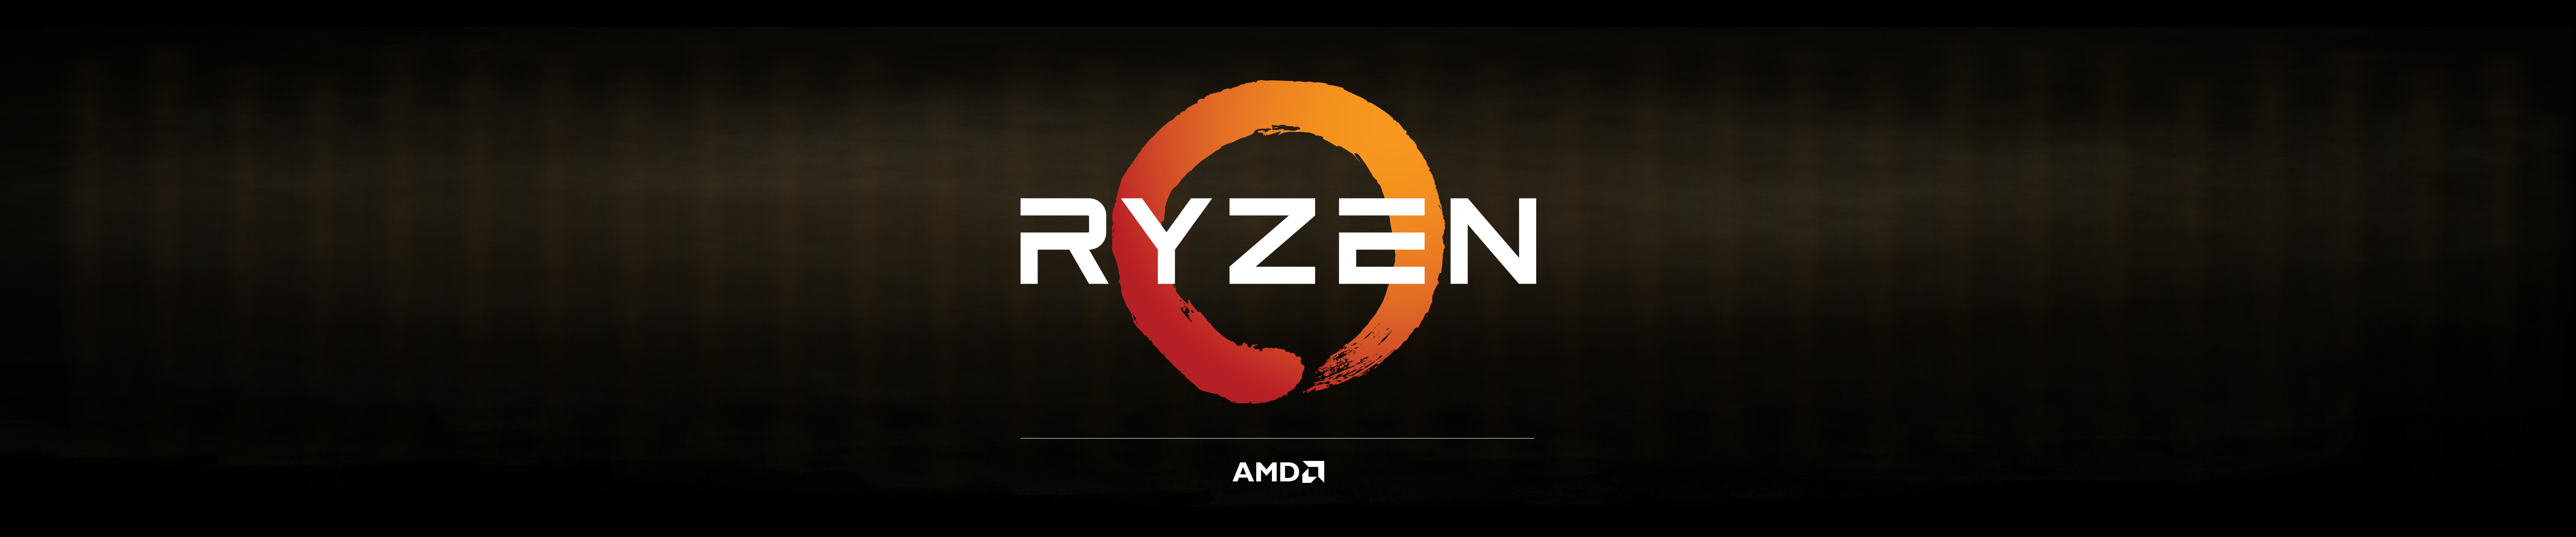 General 5760x1200 AMD RYZEN circle simple background hardware